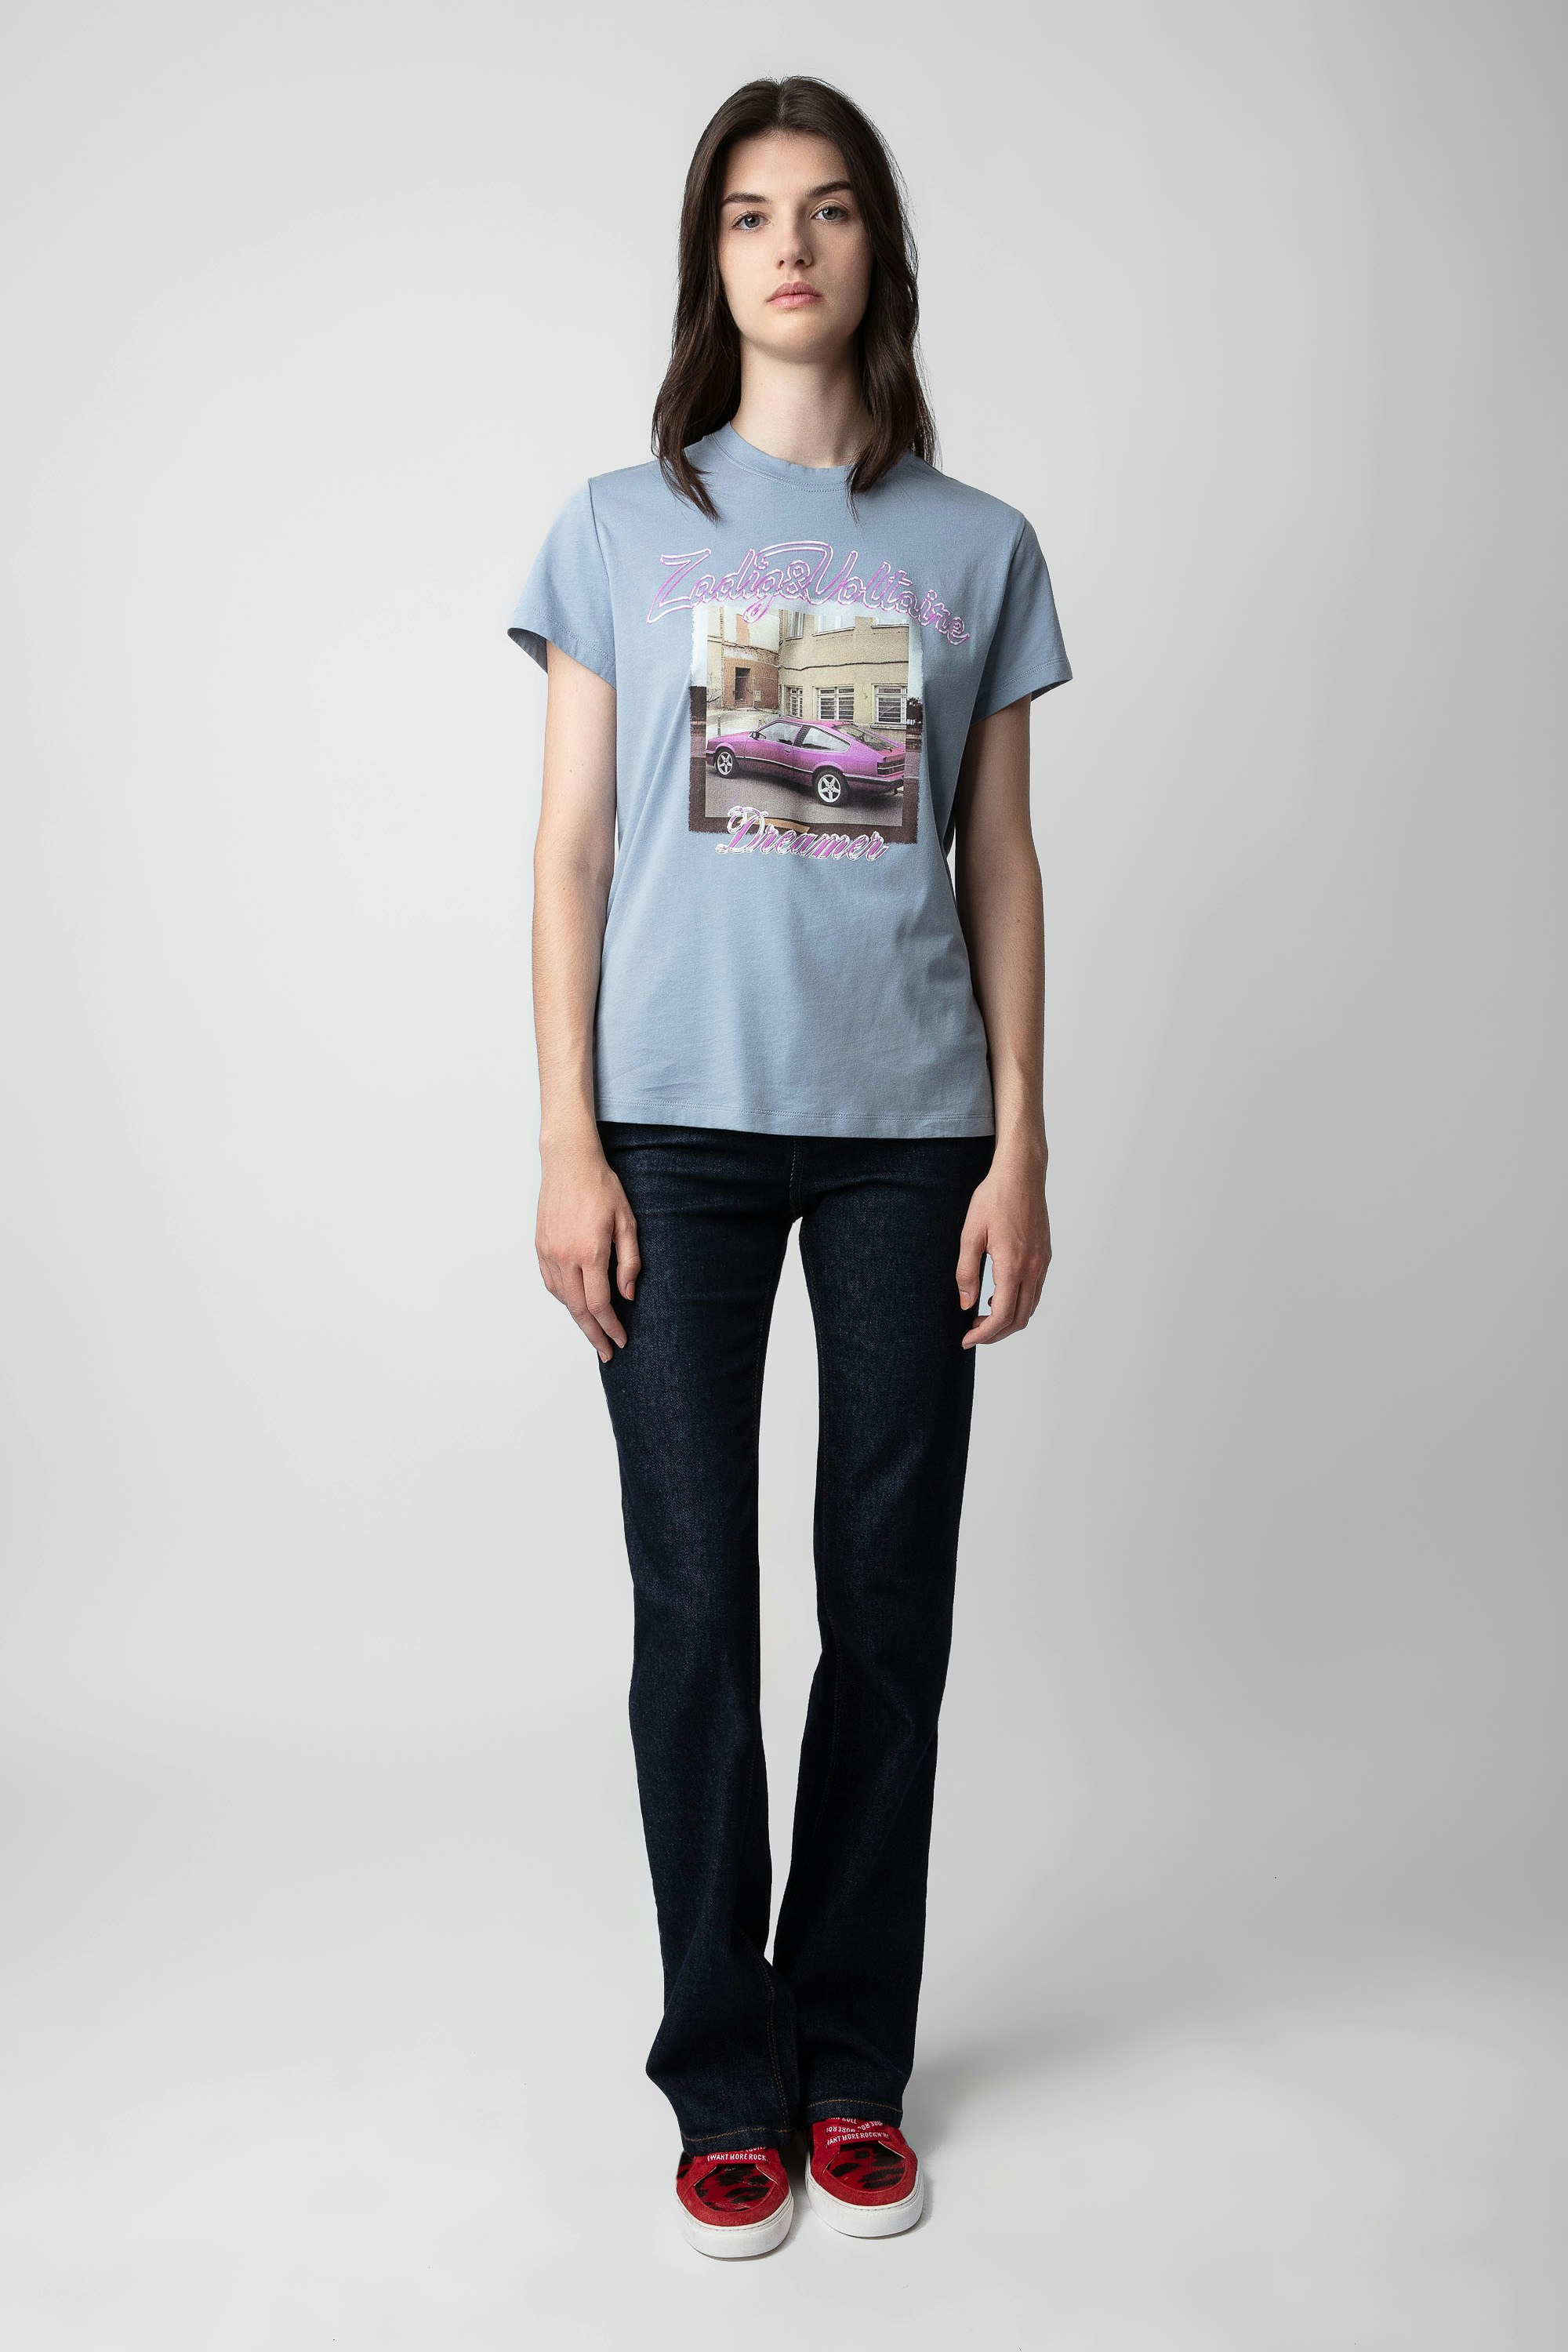 Zoe Photo Print T-shirt - Women’s sky blue cotton T-shirt with Pink Car photo print.